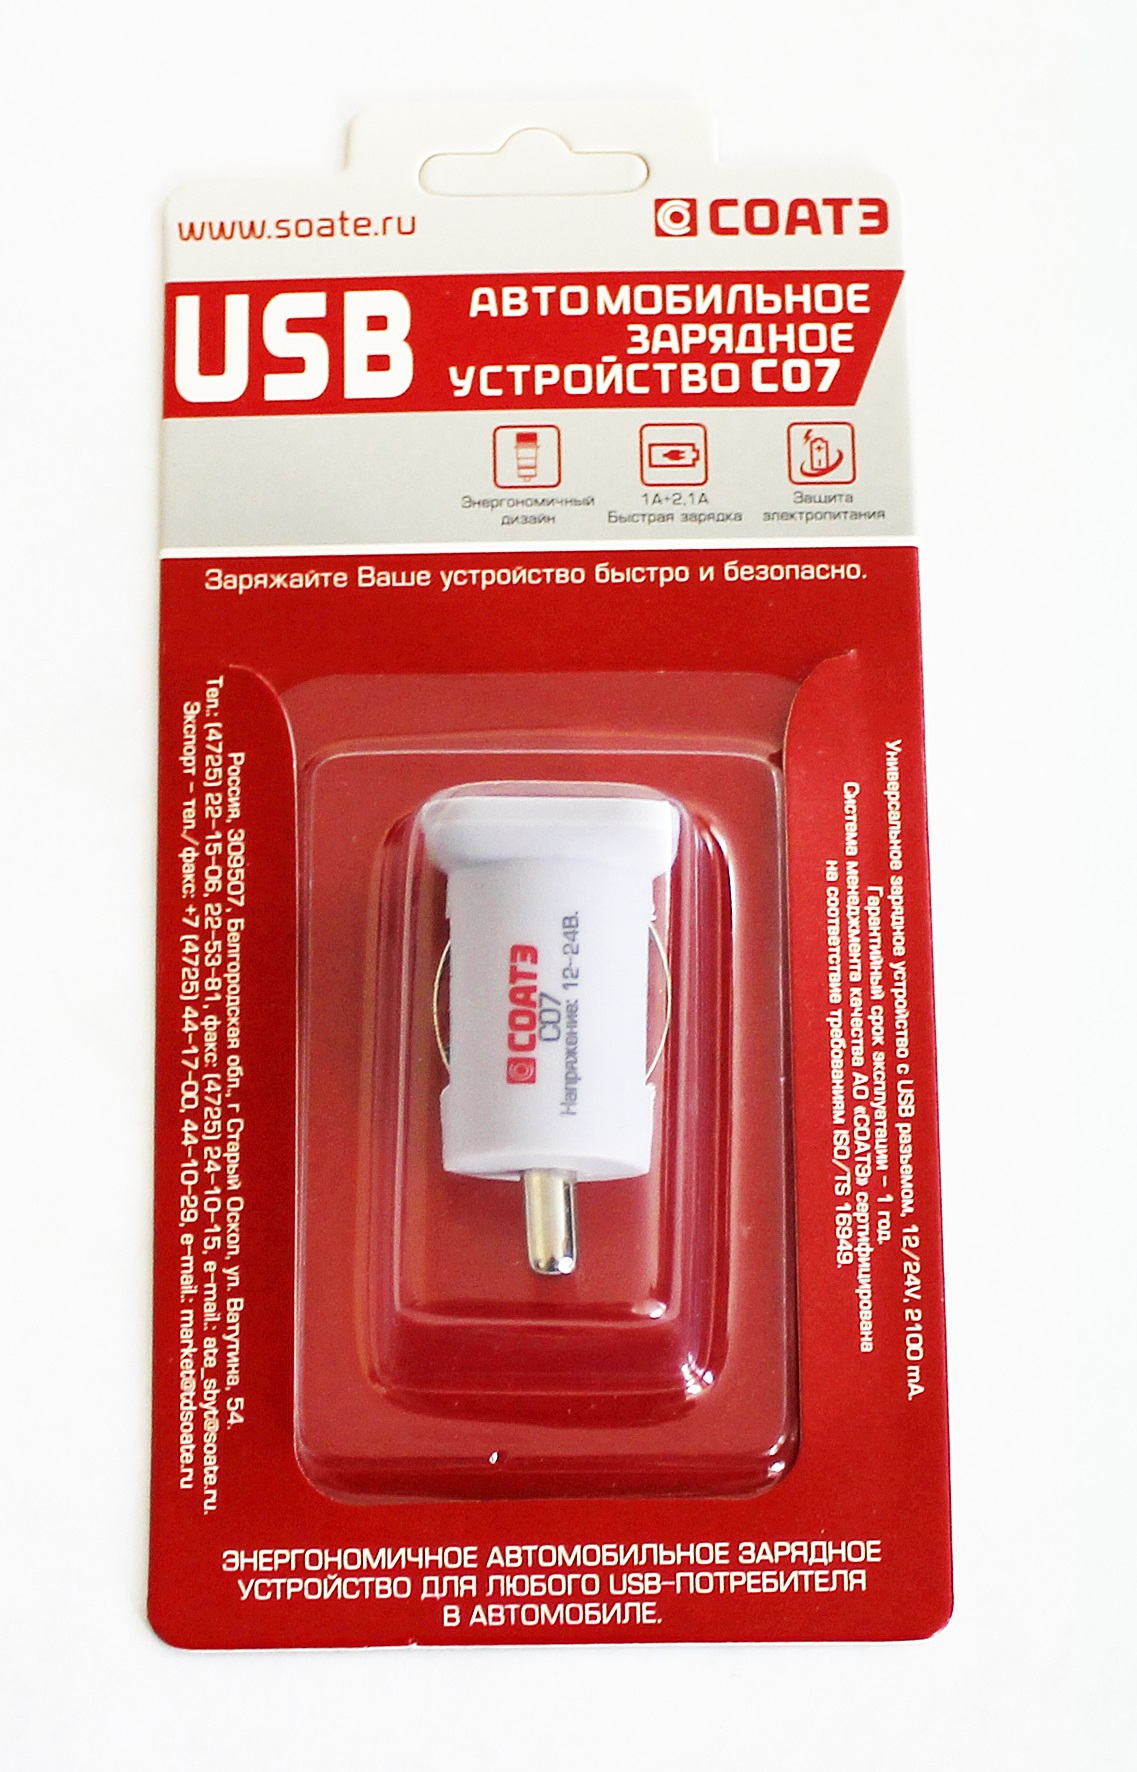 Зарядное устройство USB c двумя выходами 1,0/2.1 А. - Соатэ C07